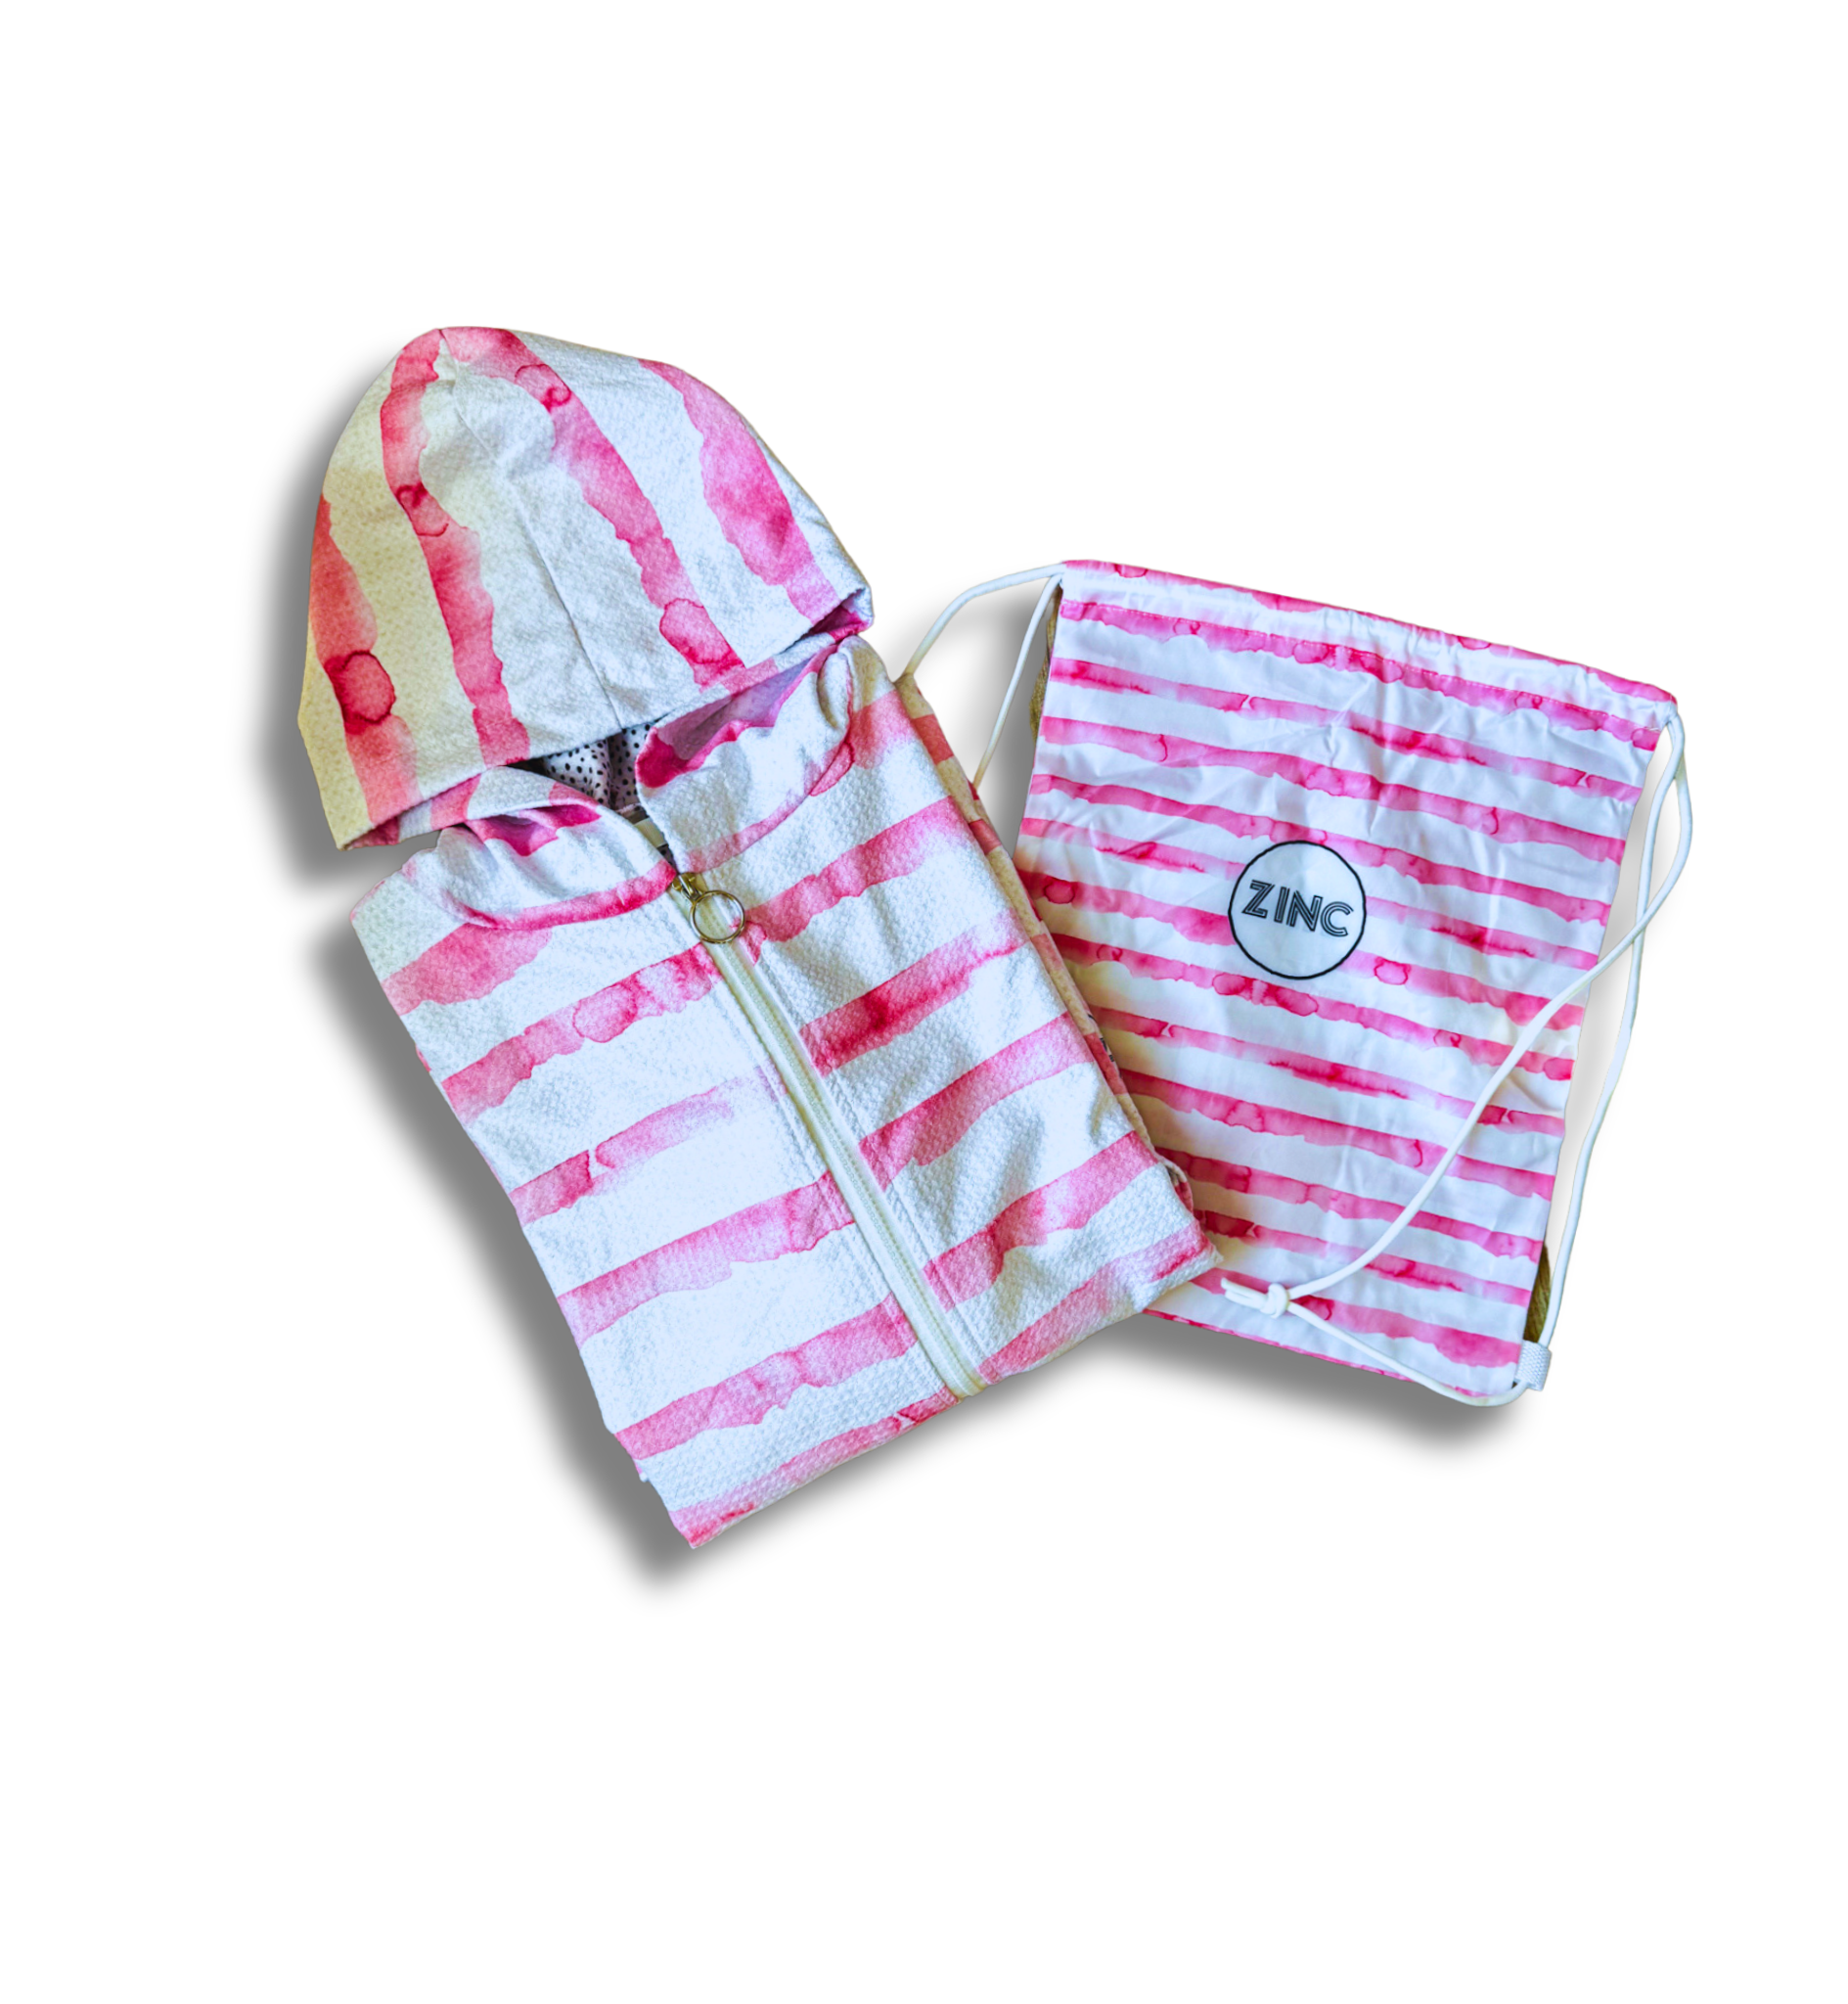 Medium ZIP UP Hooded Towel - French Beach Pink